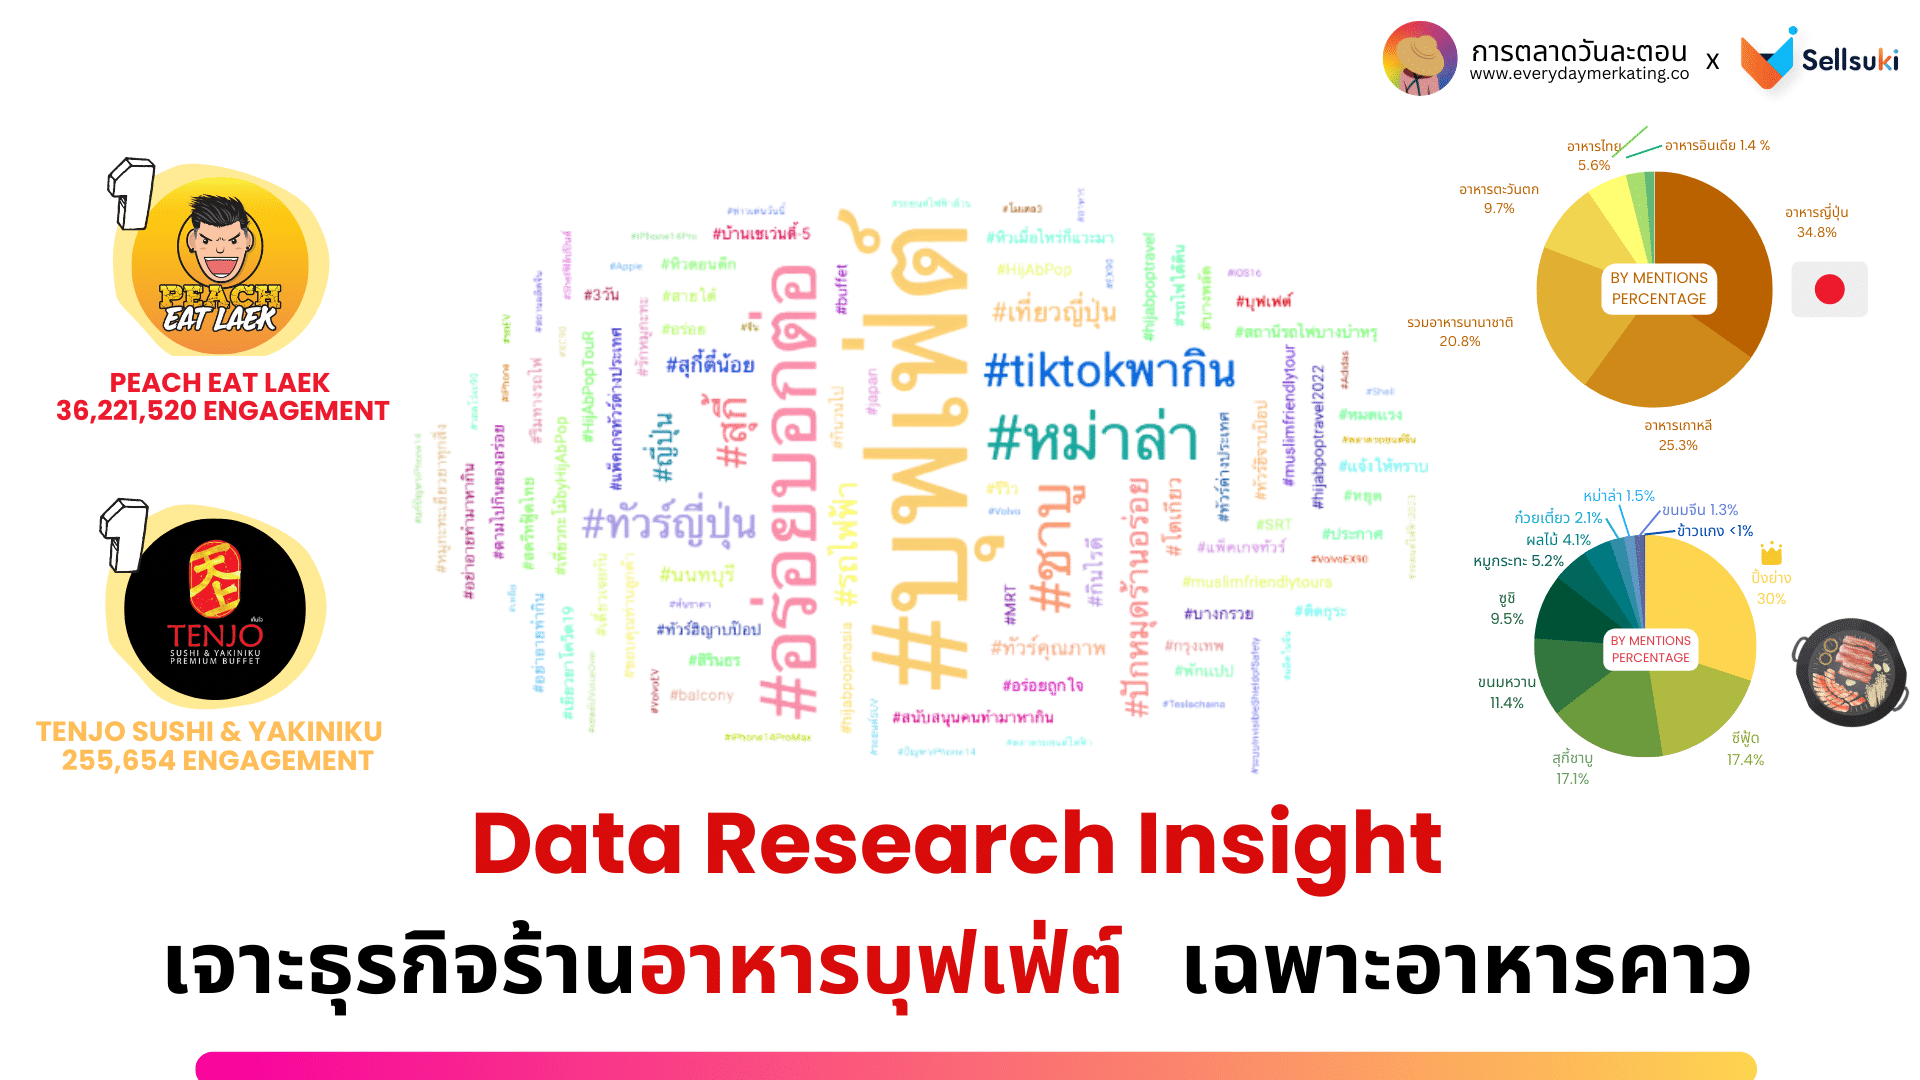 Data Research Insight เจาะธุรกิจ บุฟเฟ่ต์ by Social Listening